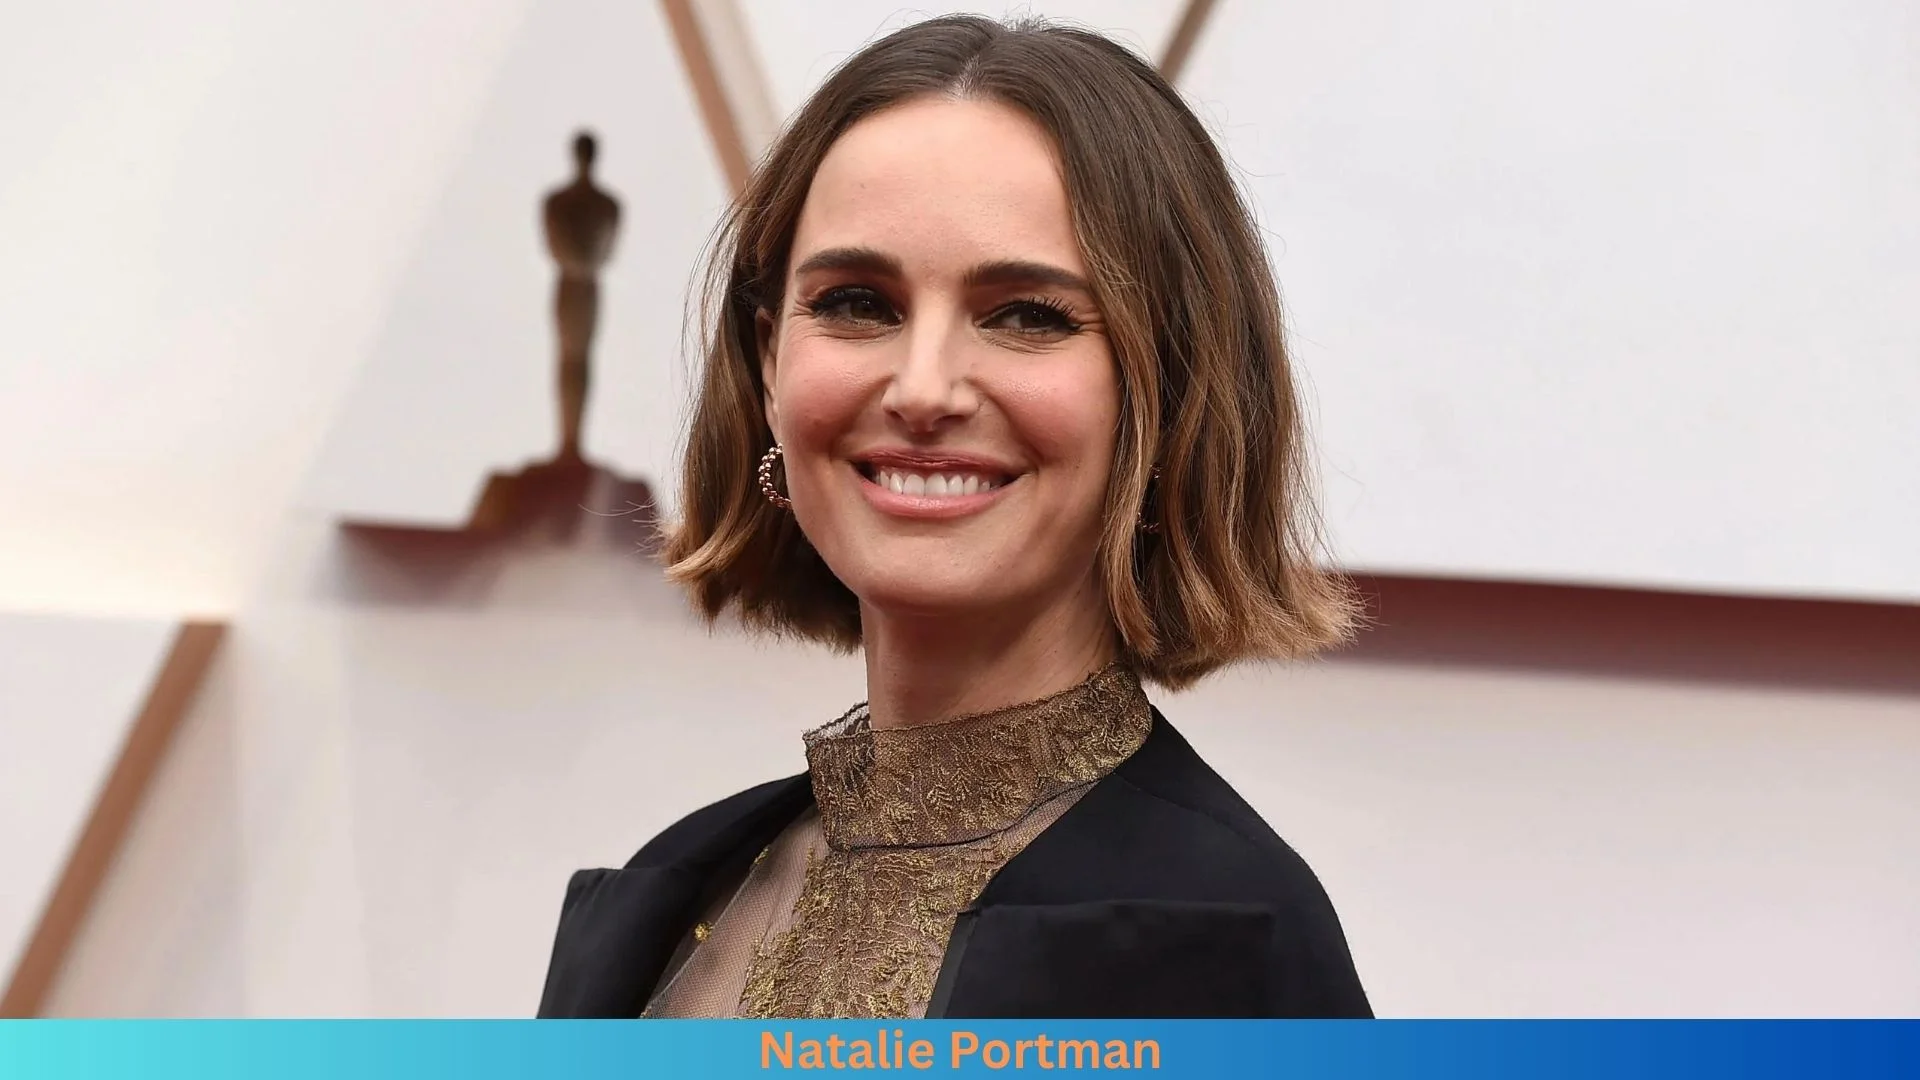 Net Worth of Natalie Portman